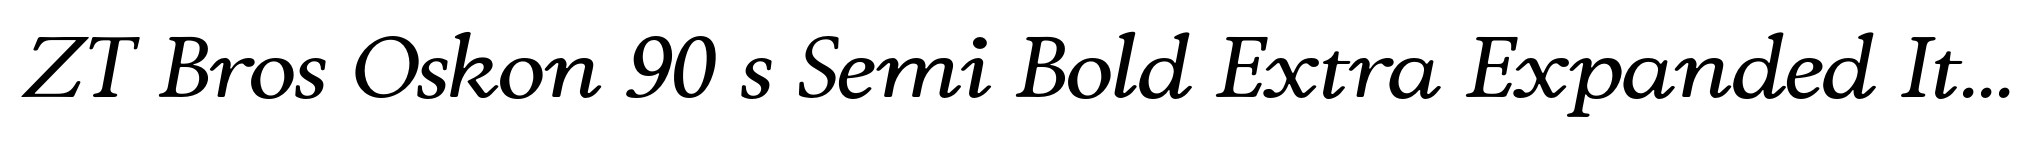 ZT Bros Oskon 90 s Semi Bold Extra Expanded Italic image